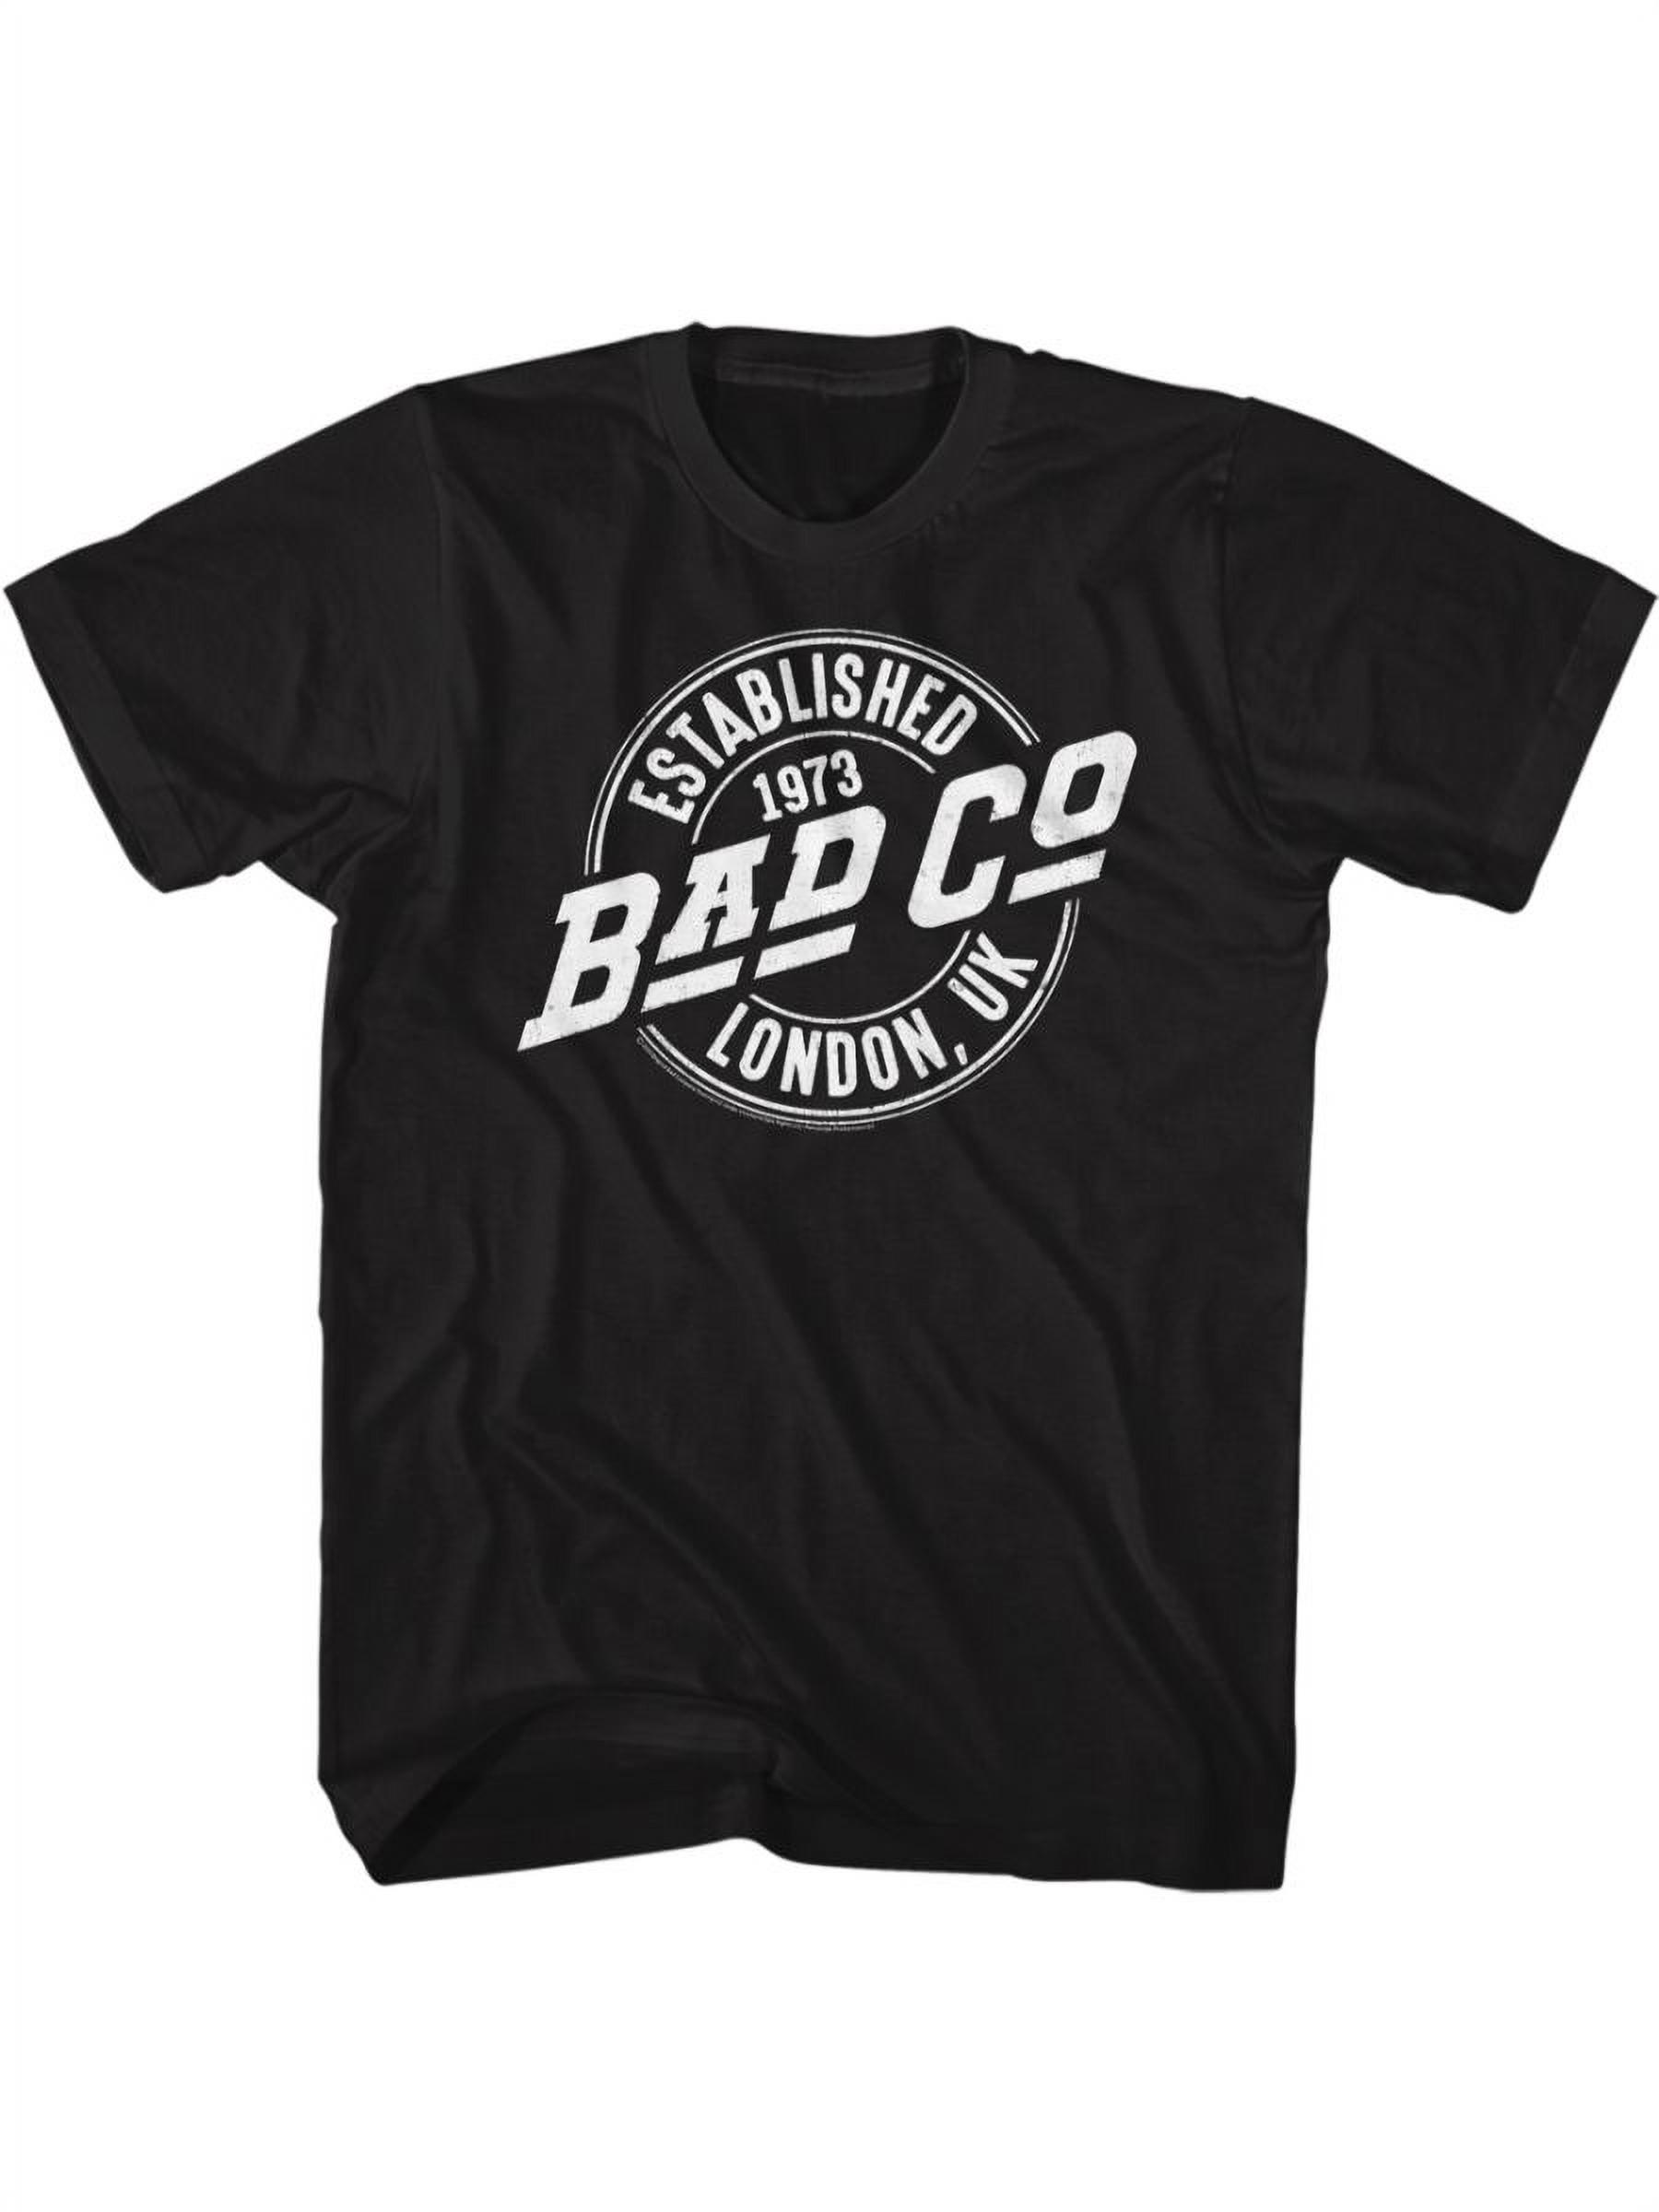 Bad Company English Hard Rock Band Established 1973 Adult Short Sleeve T-Shirt Graphic Tee - image 1 of 2